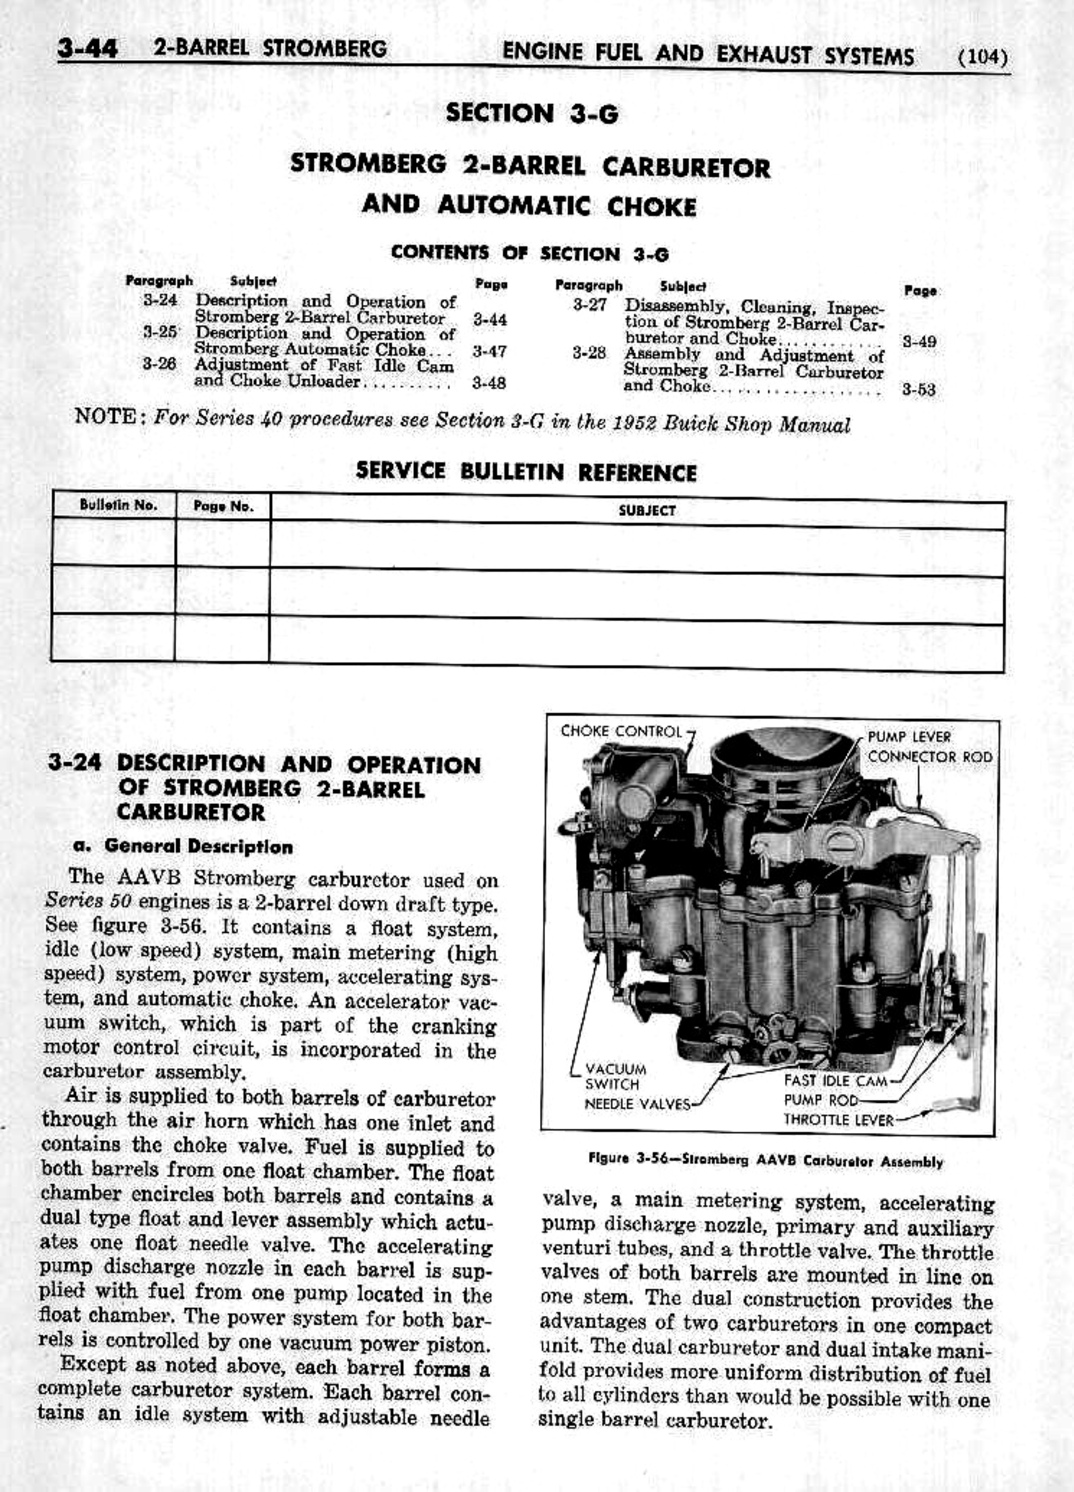 n_04 1953 Buick Shop Manual - Engine Fuel & Exhaust-044-044.jpg